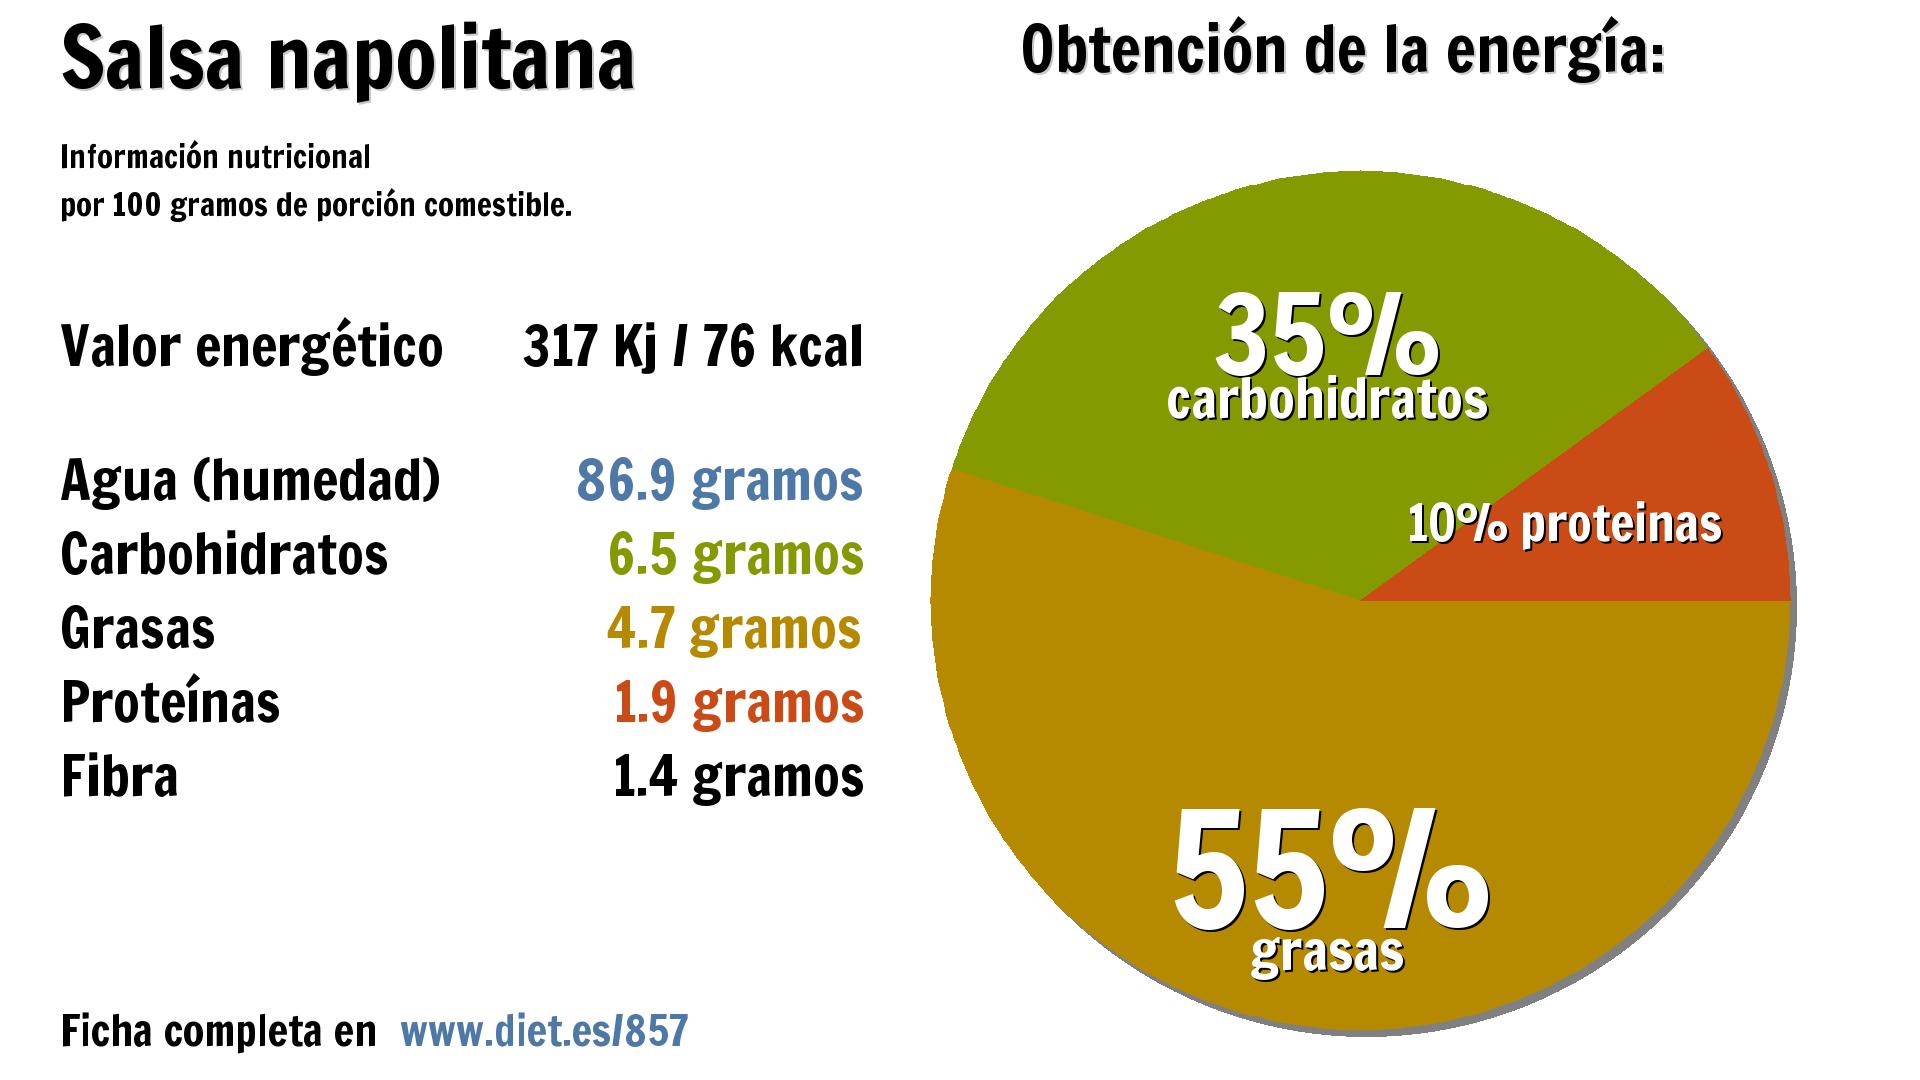 Salsa napolitana: energía 317 Kj, agua 87 g., carbohidratos 7 g., grasas 5 g., proteínas 2 g. y fibra 1 g.